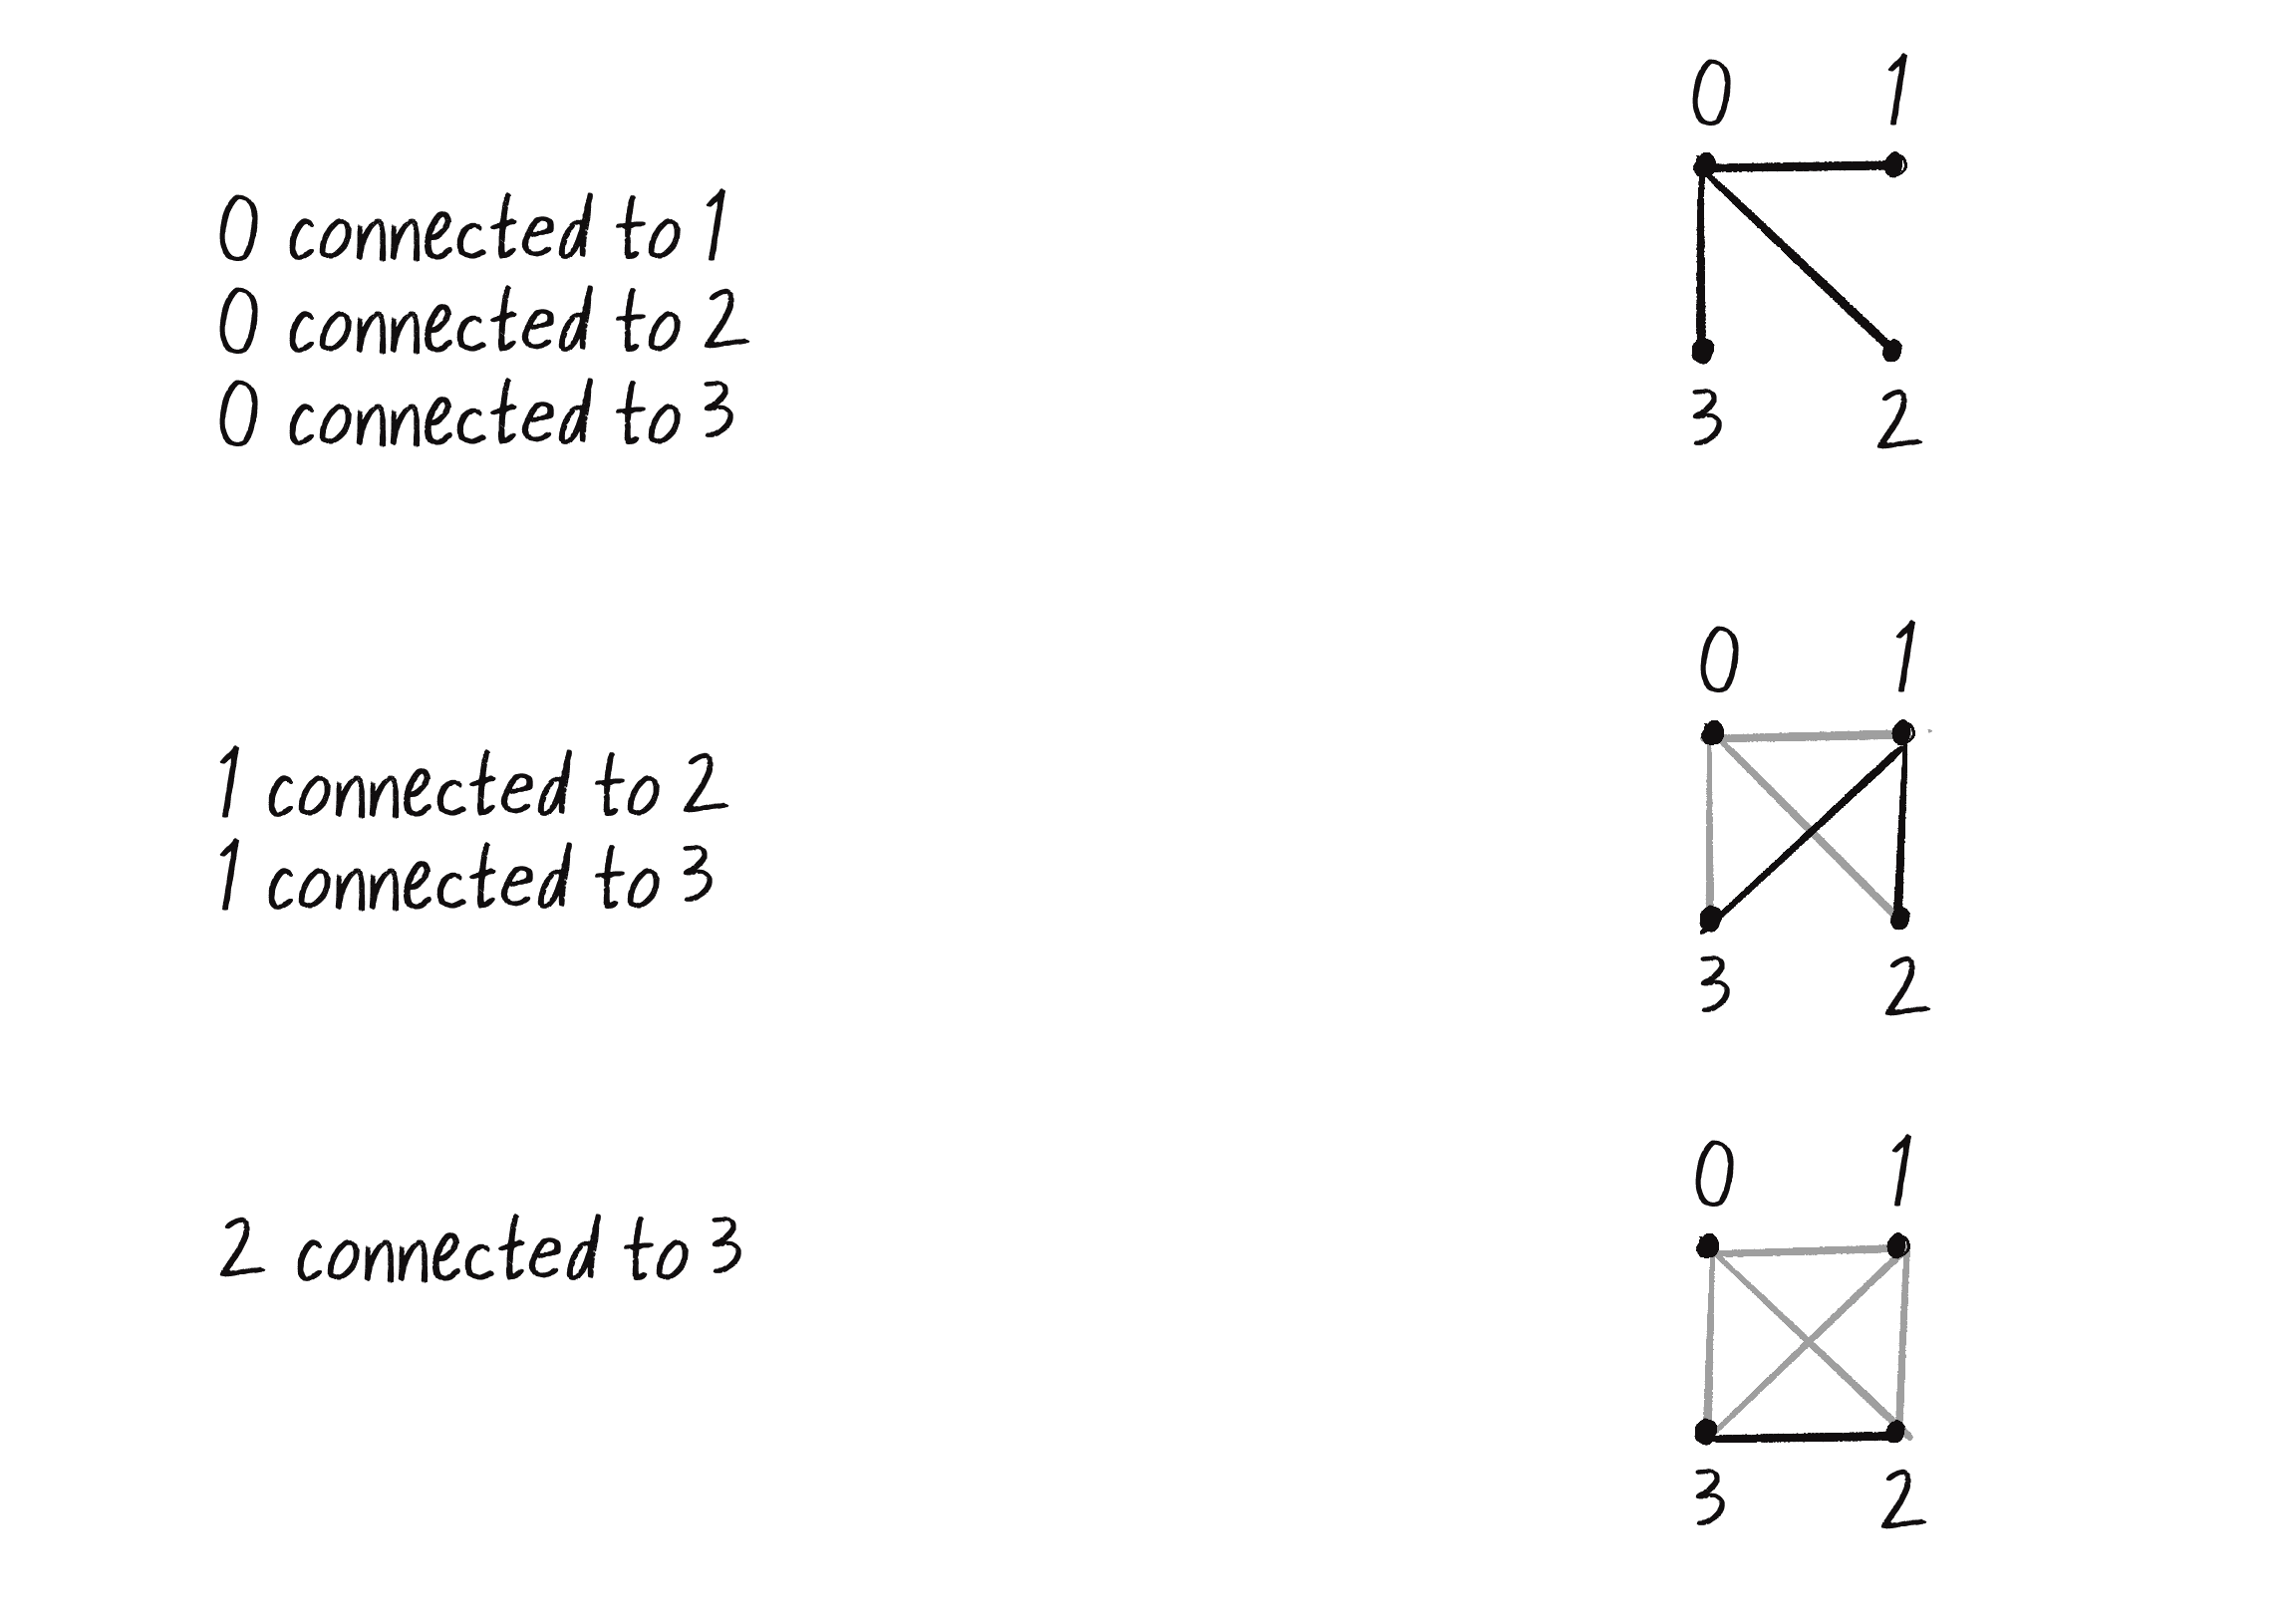 Figure 6.19